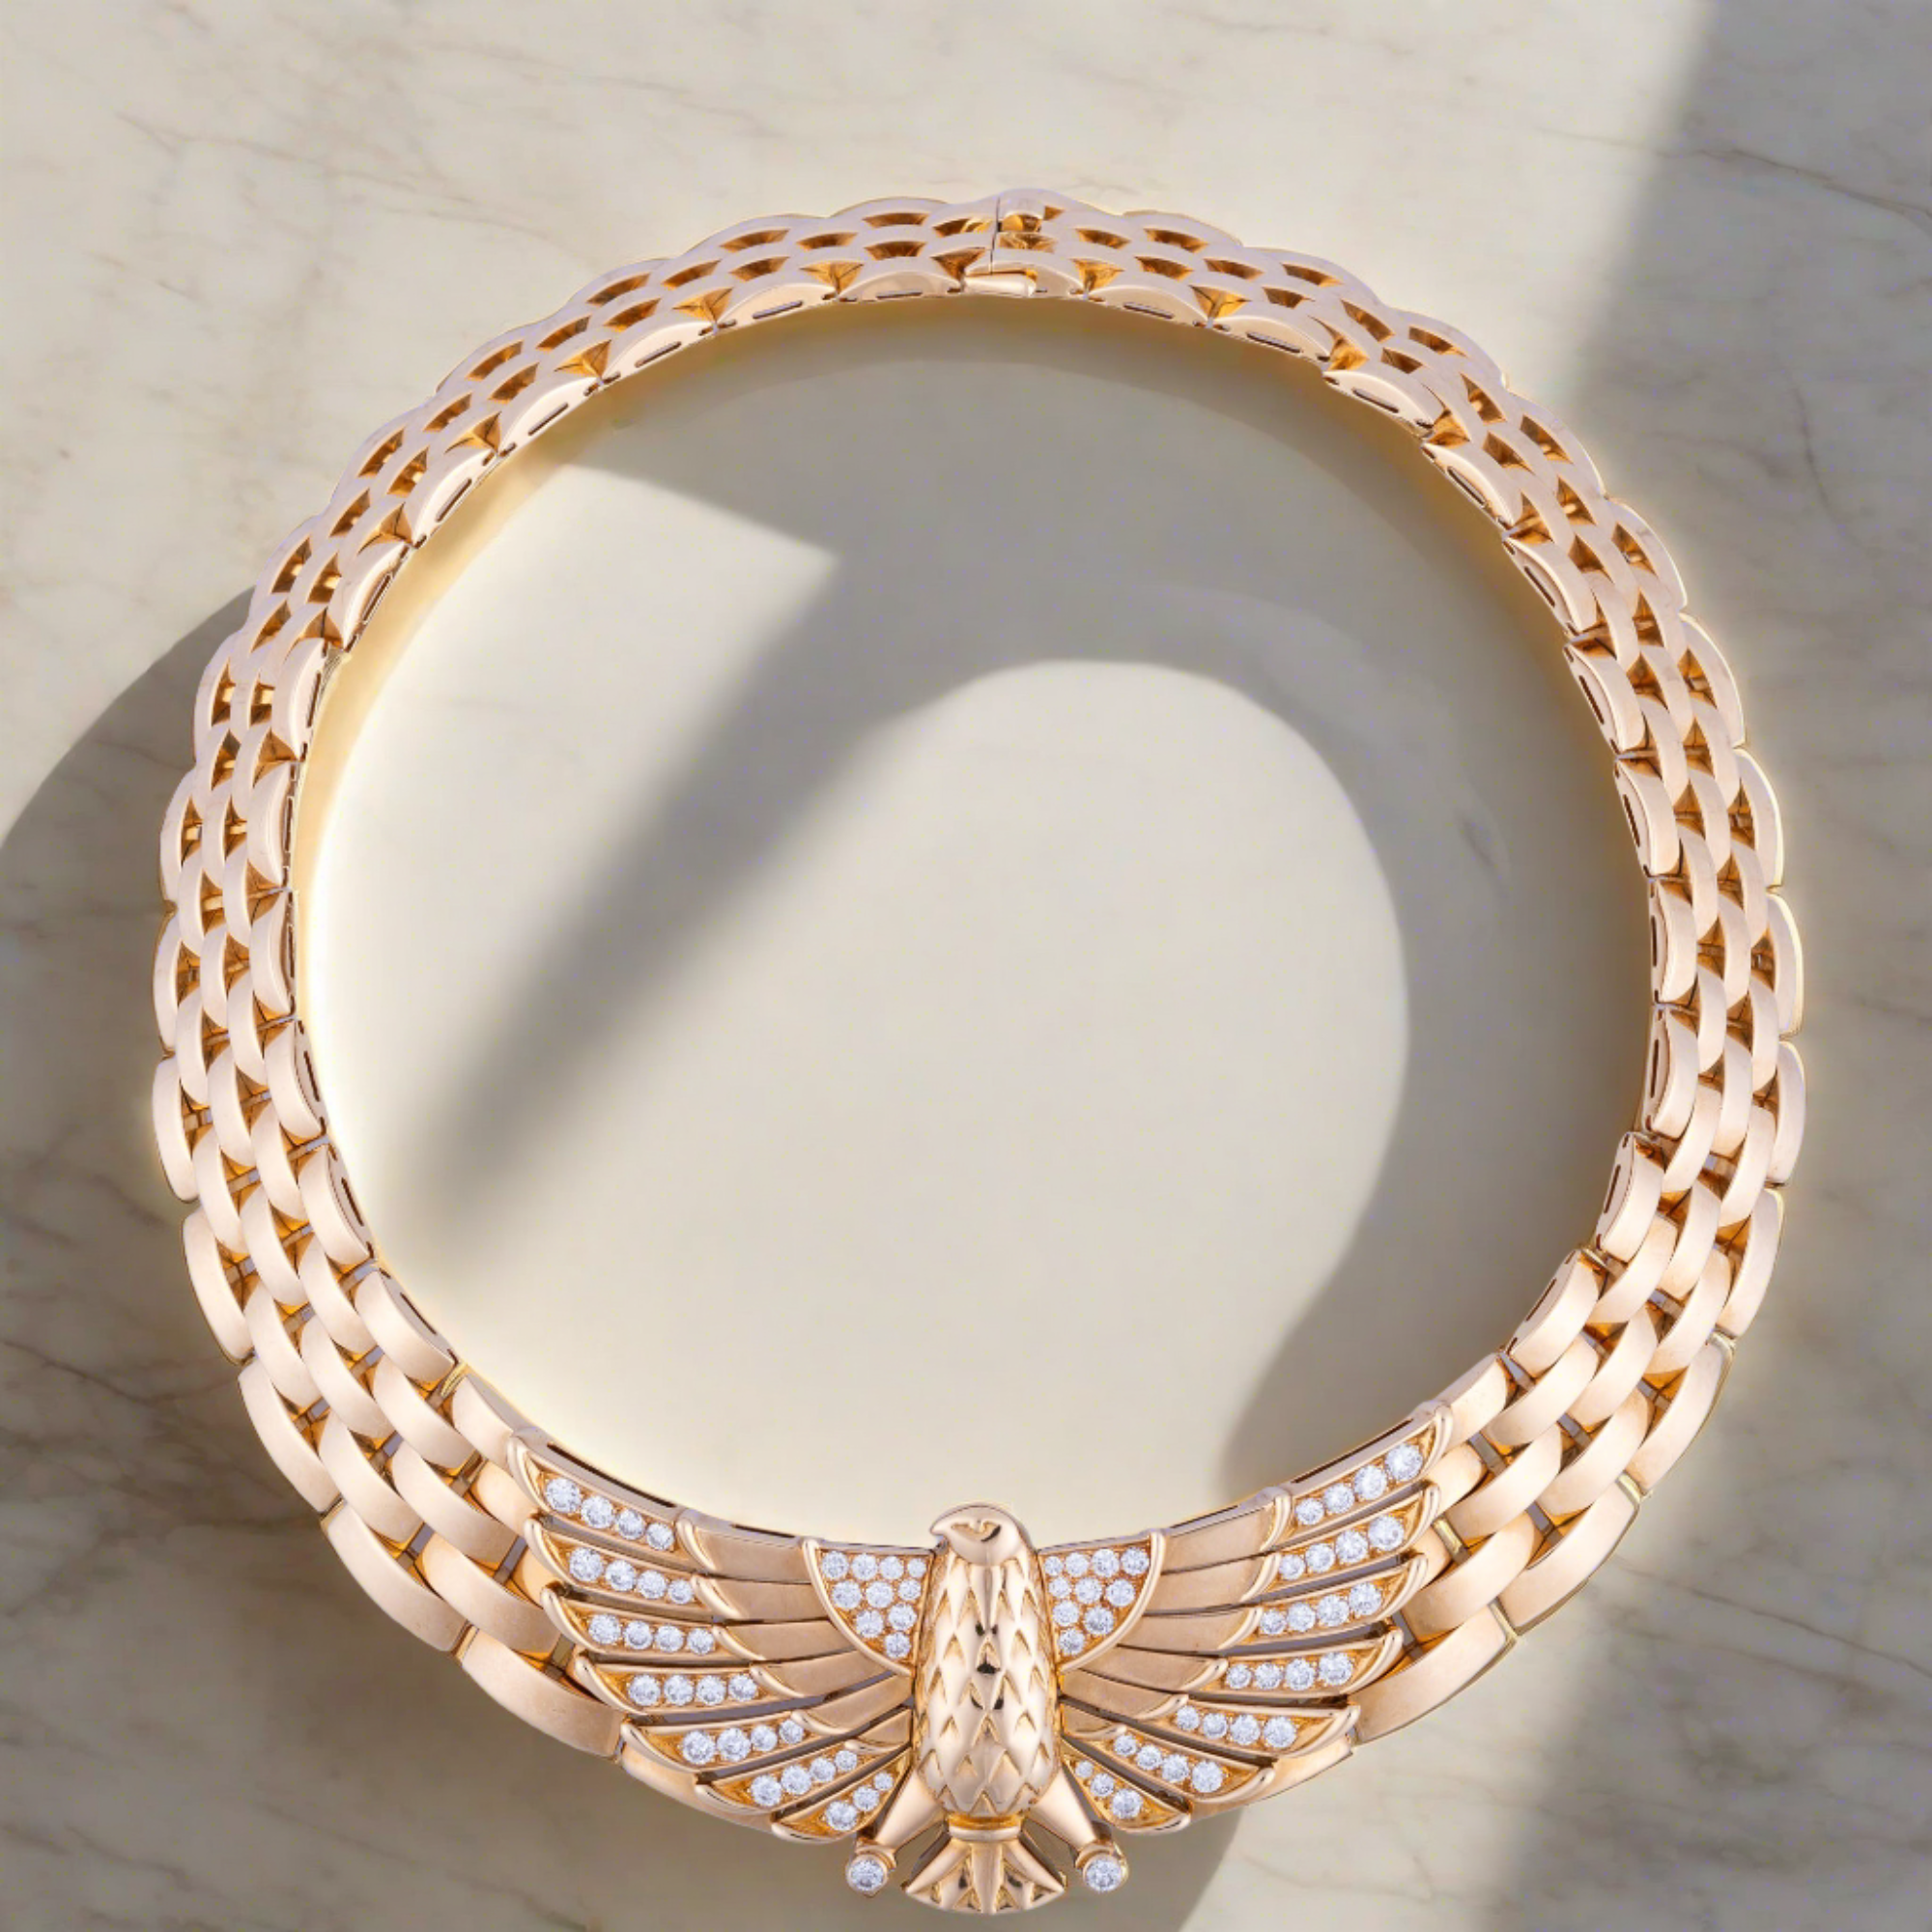 Estate Jewelry Collection - Cartier Gold and Diamond Egyptian Falcon Horus Collar